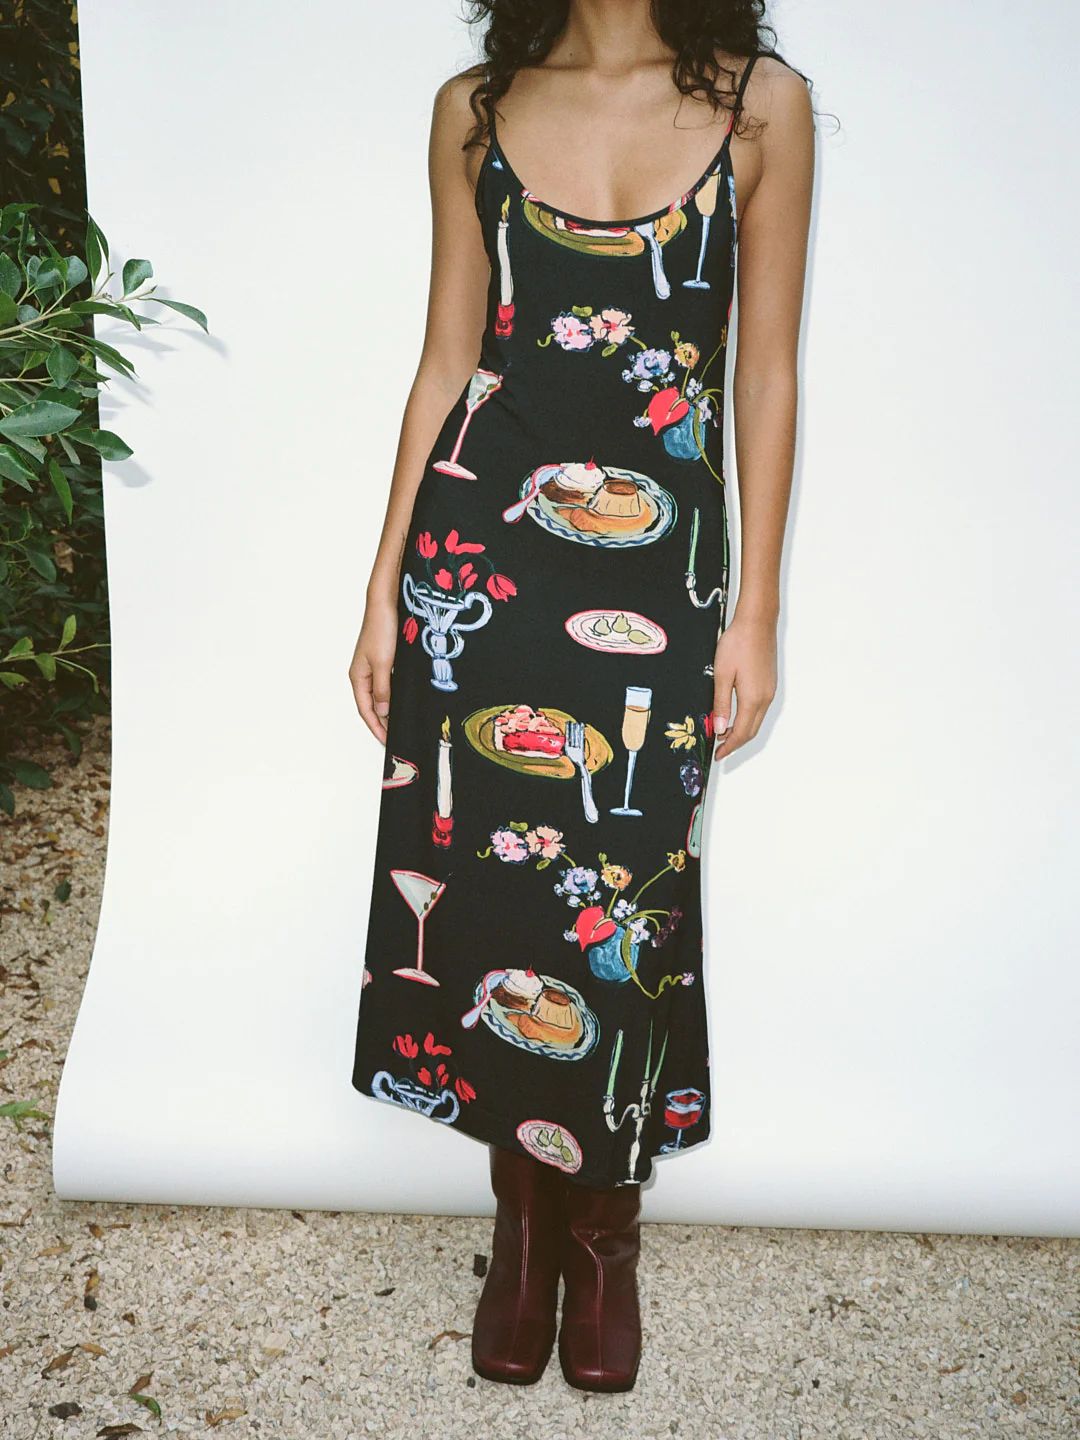 Sofia Slip Dress - Set the Table Caviar | Lisa Says Gah